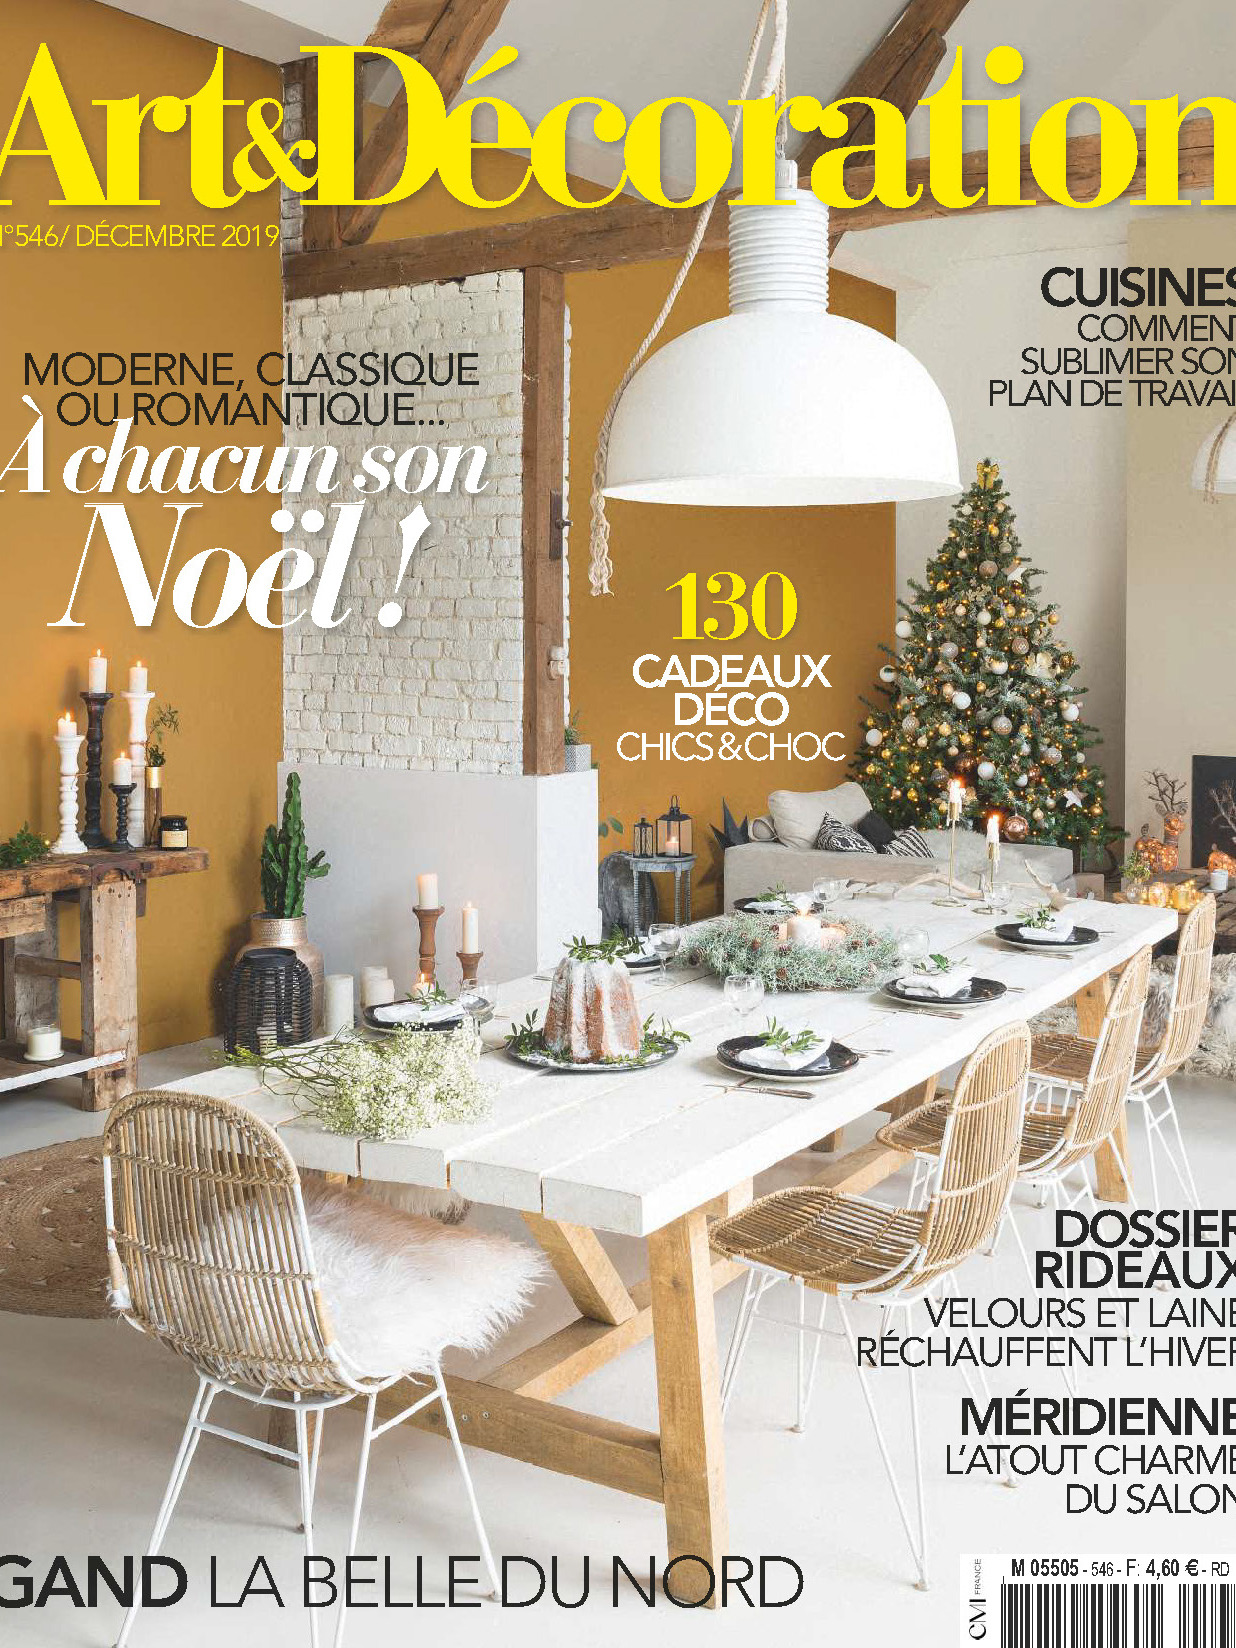 《Art&Decoration》法国版时尚综合杂志2019年12月号